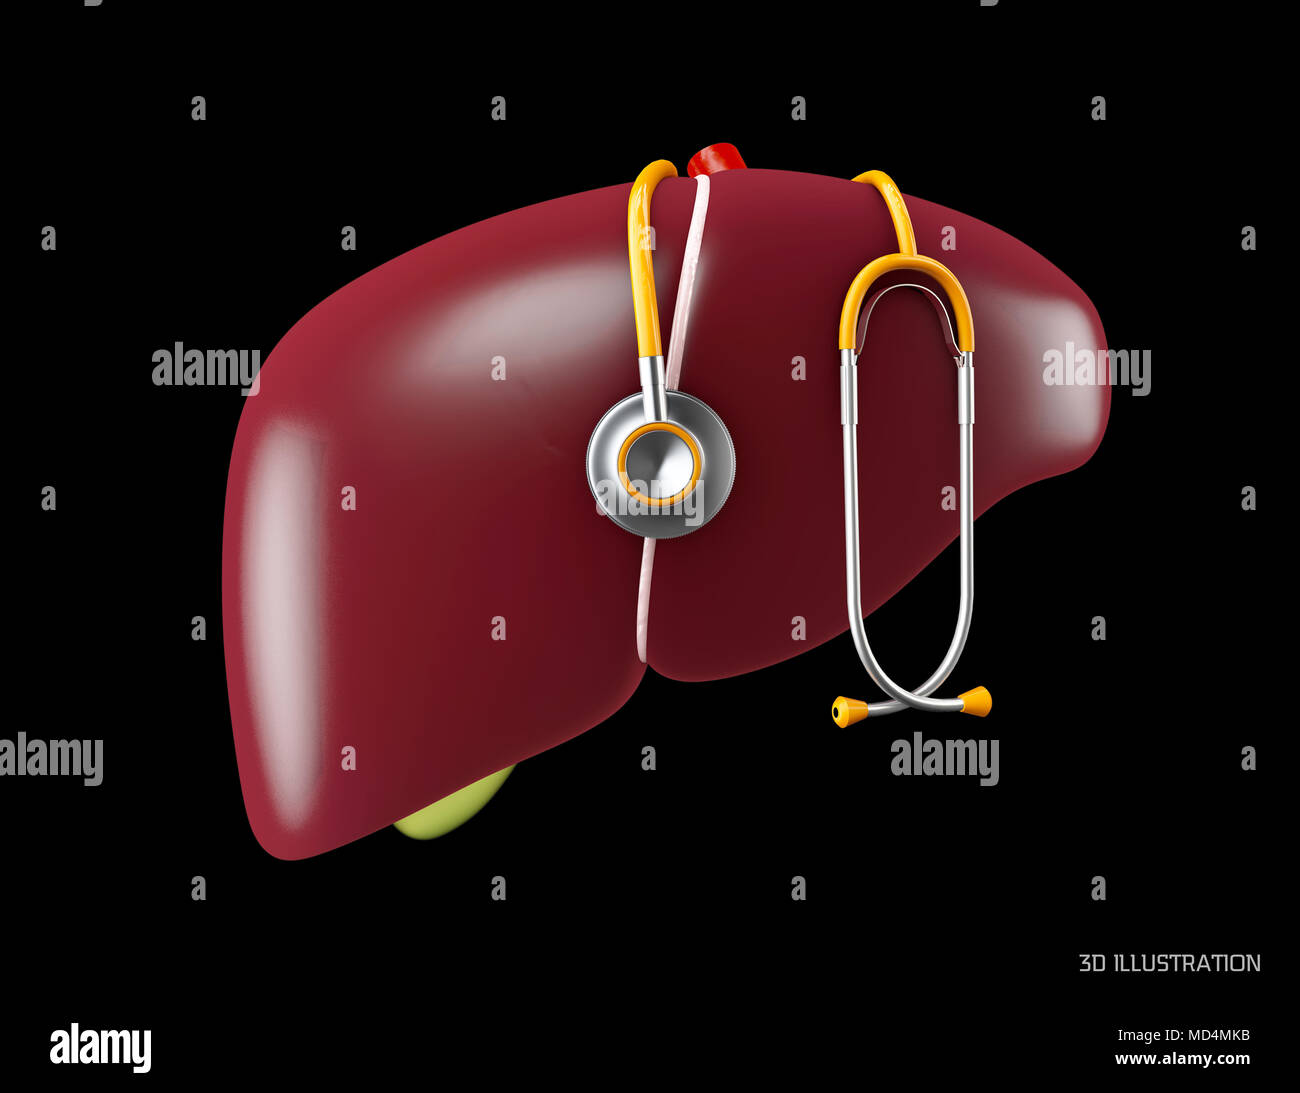 Human Liver Anatomy Human Internal Organs Symbol 3d Illustration Isolated On Black Background 3d Illustration Stock Photo Alamy